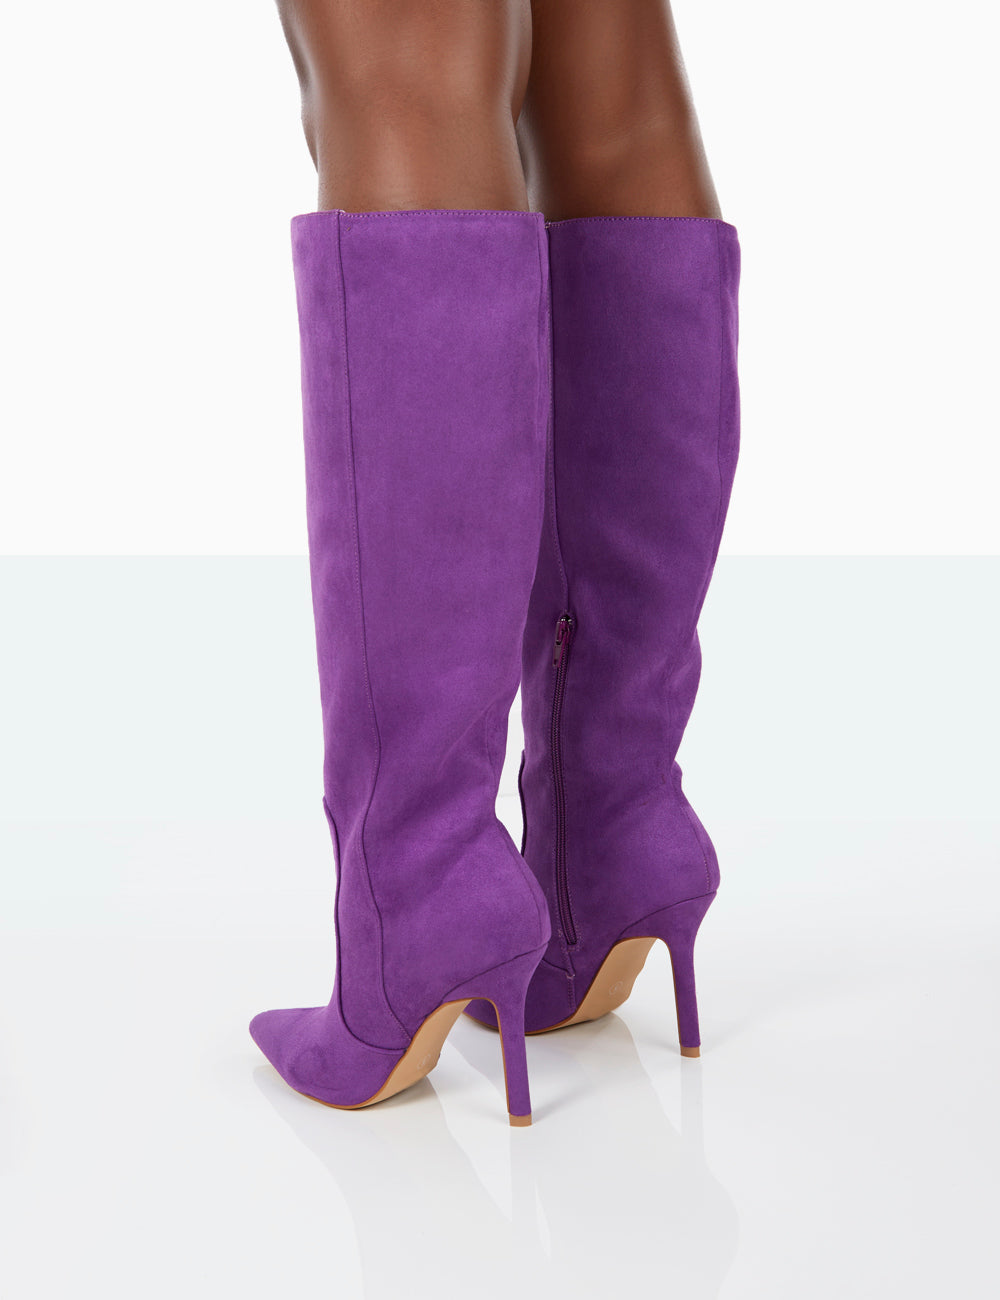 purple high heel boots